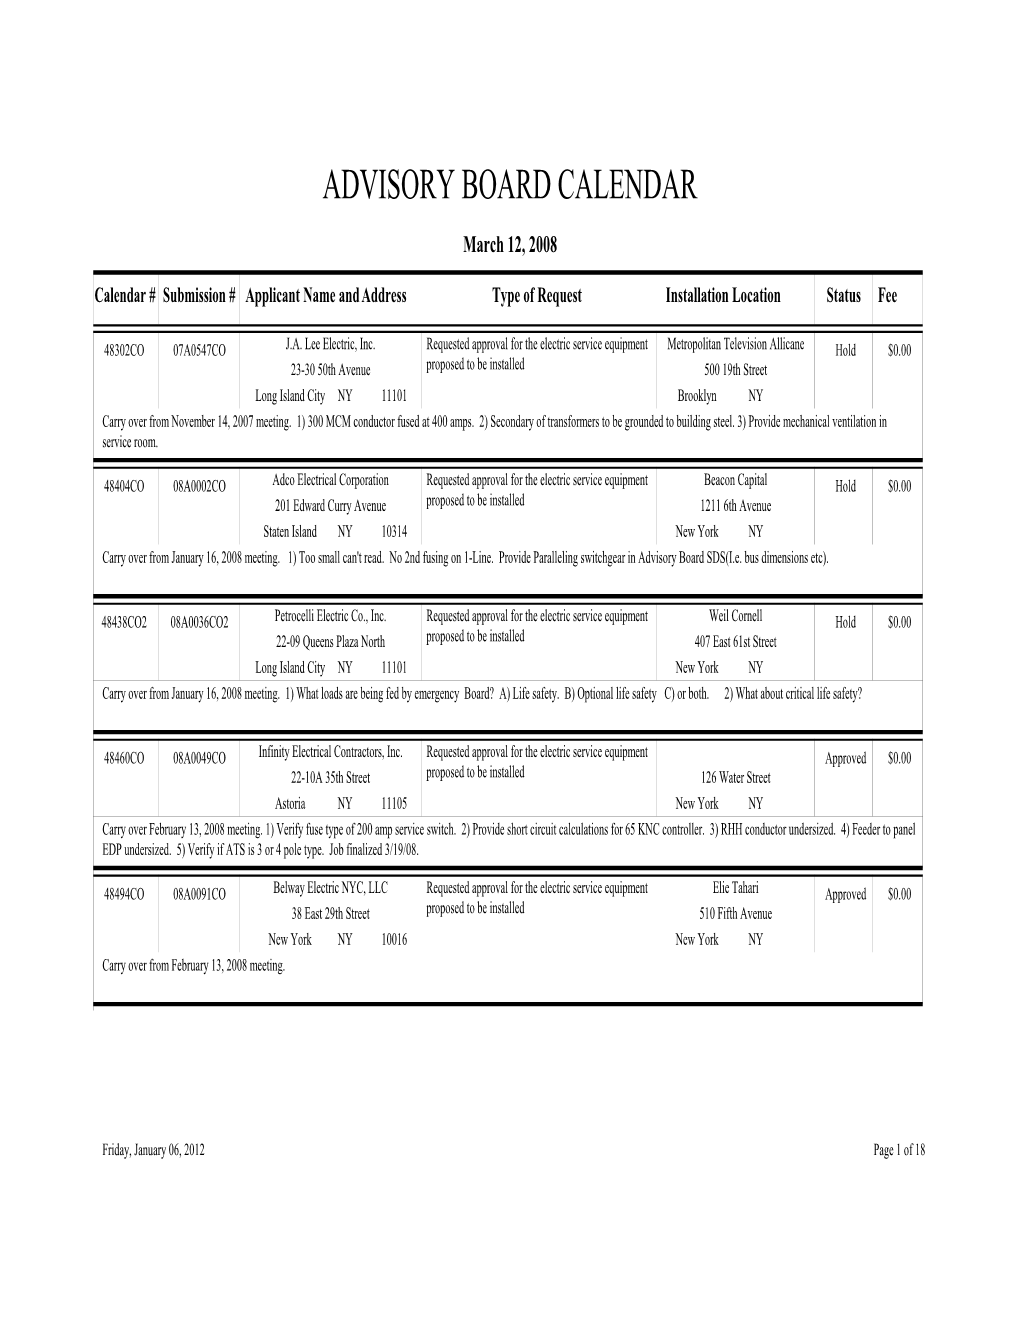 Advisory Board Calendar